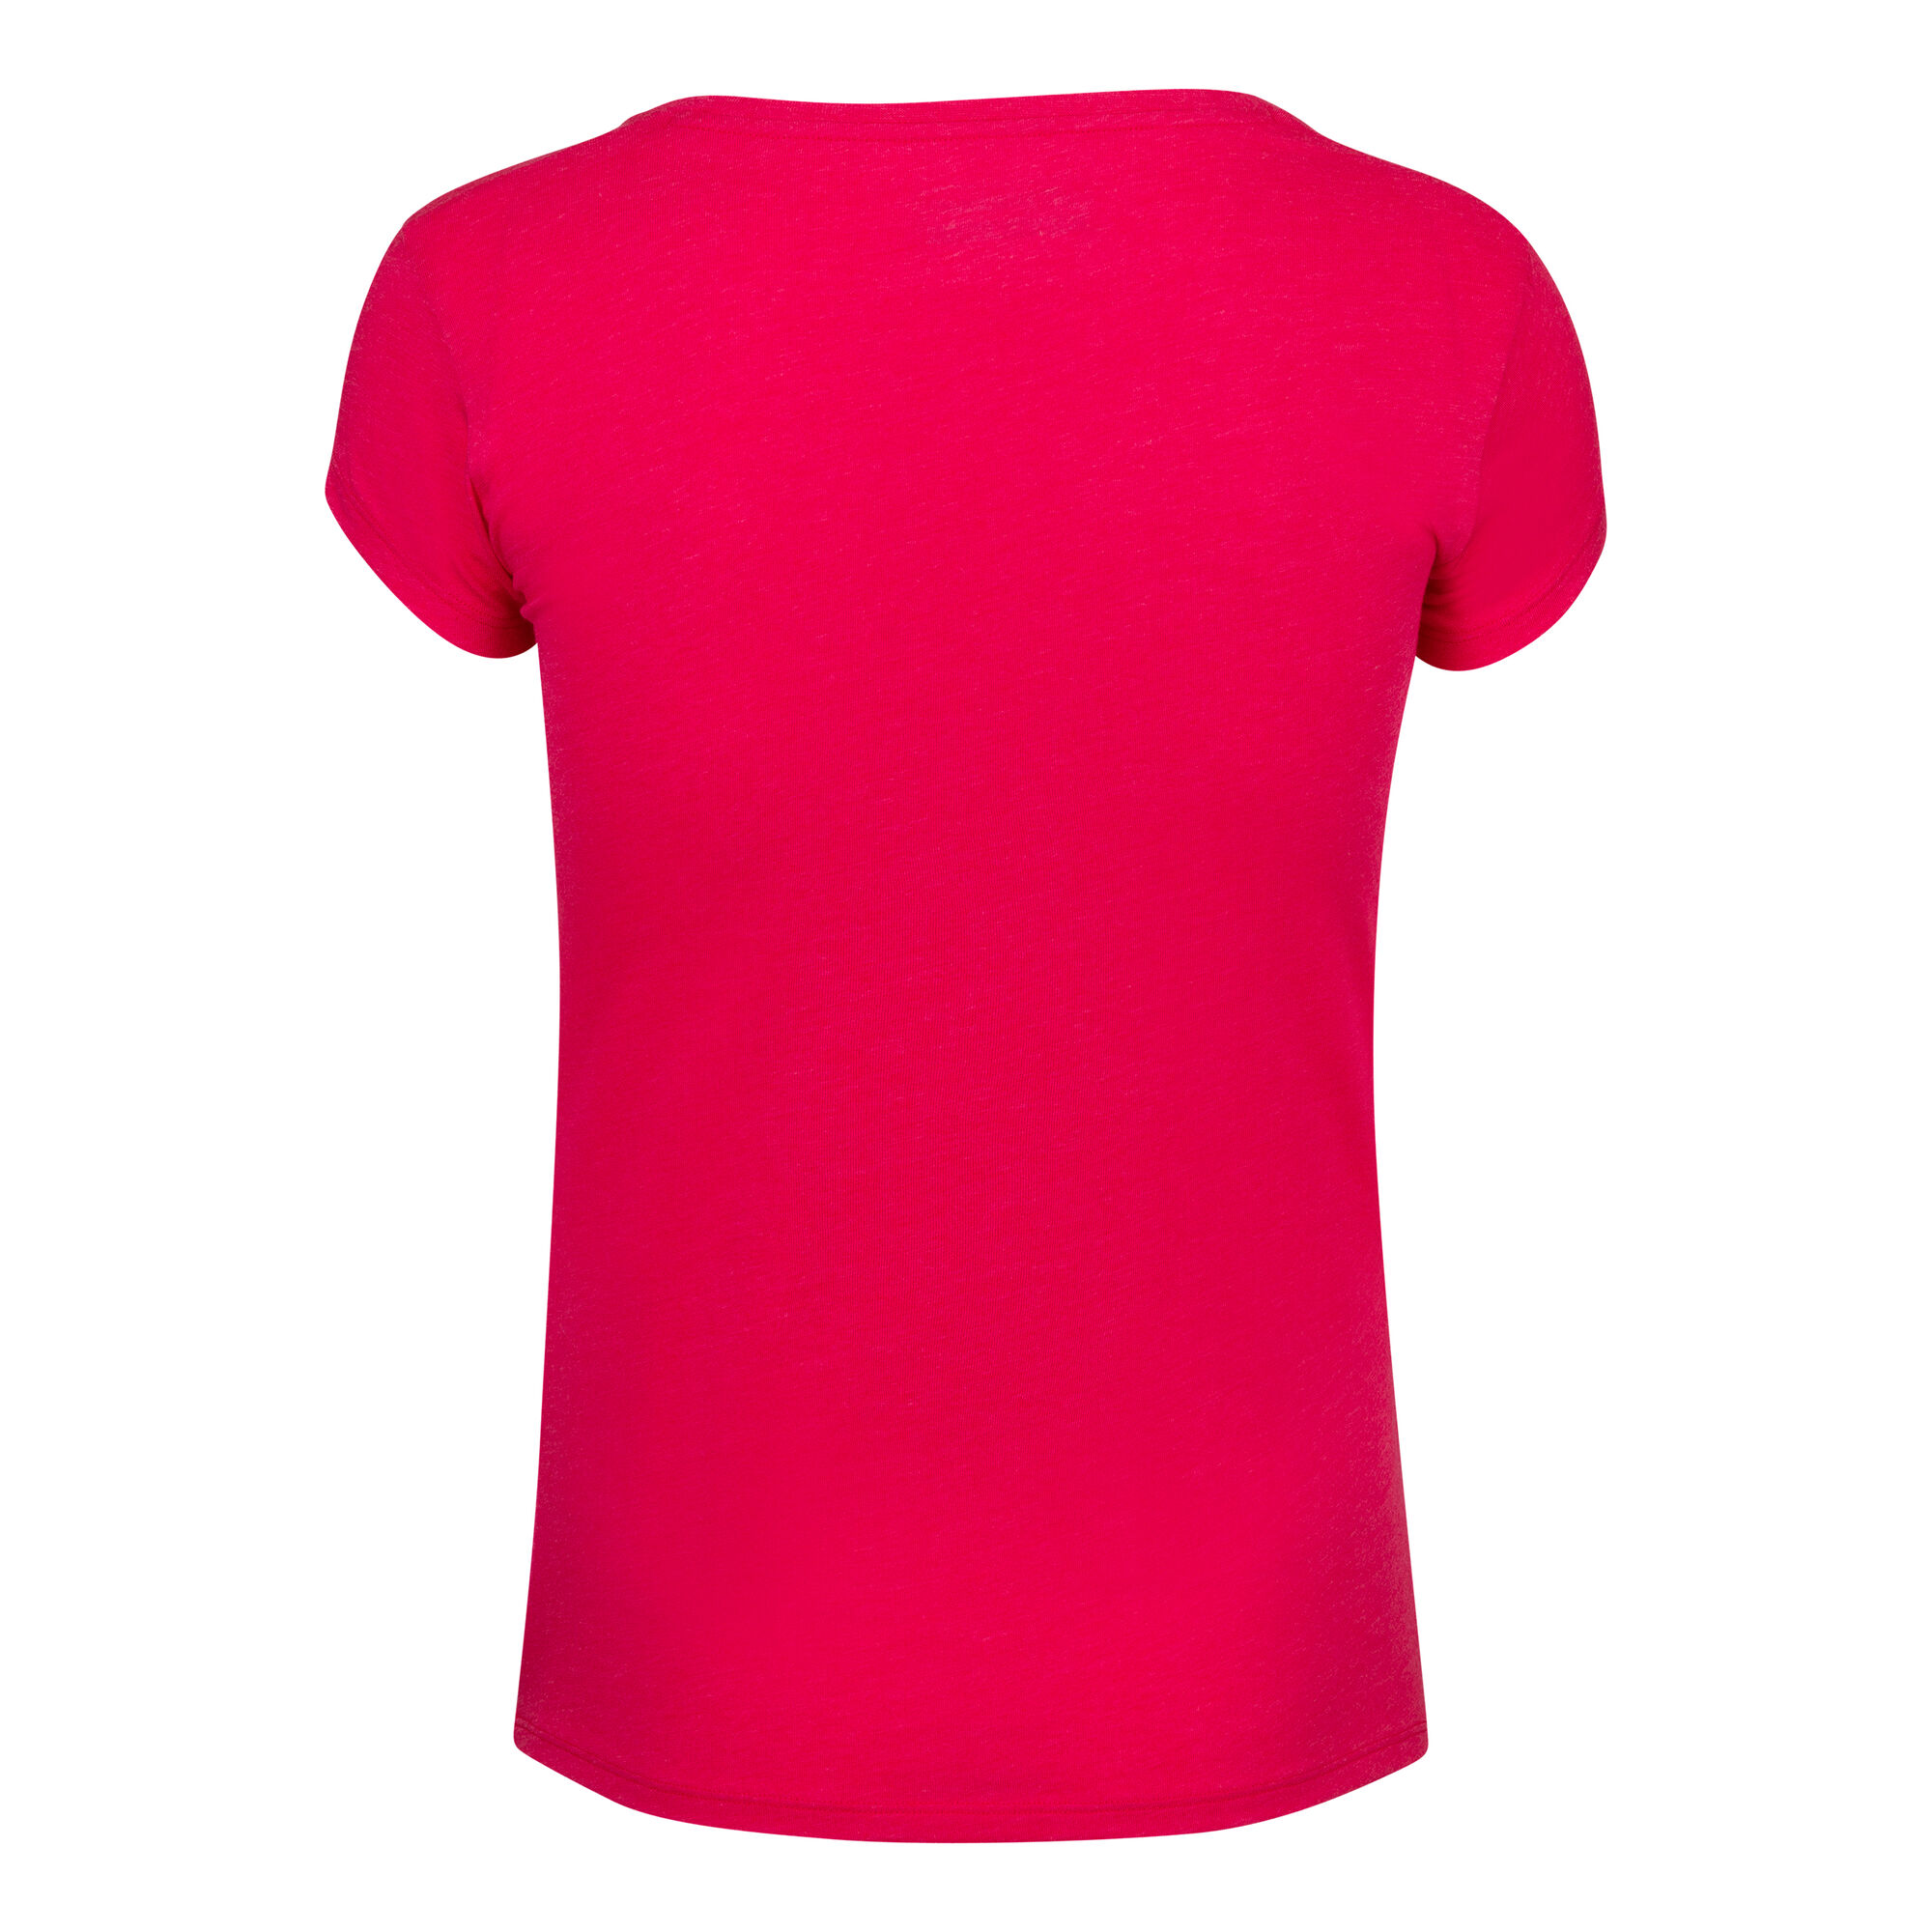 Buy Babolat Exercise T-Shirt Women Pink, White online